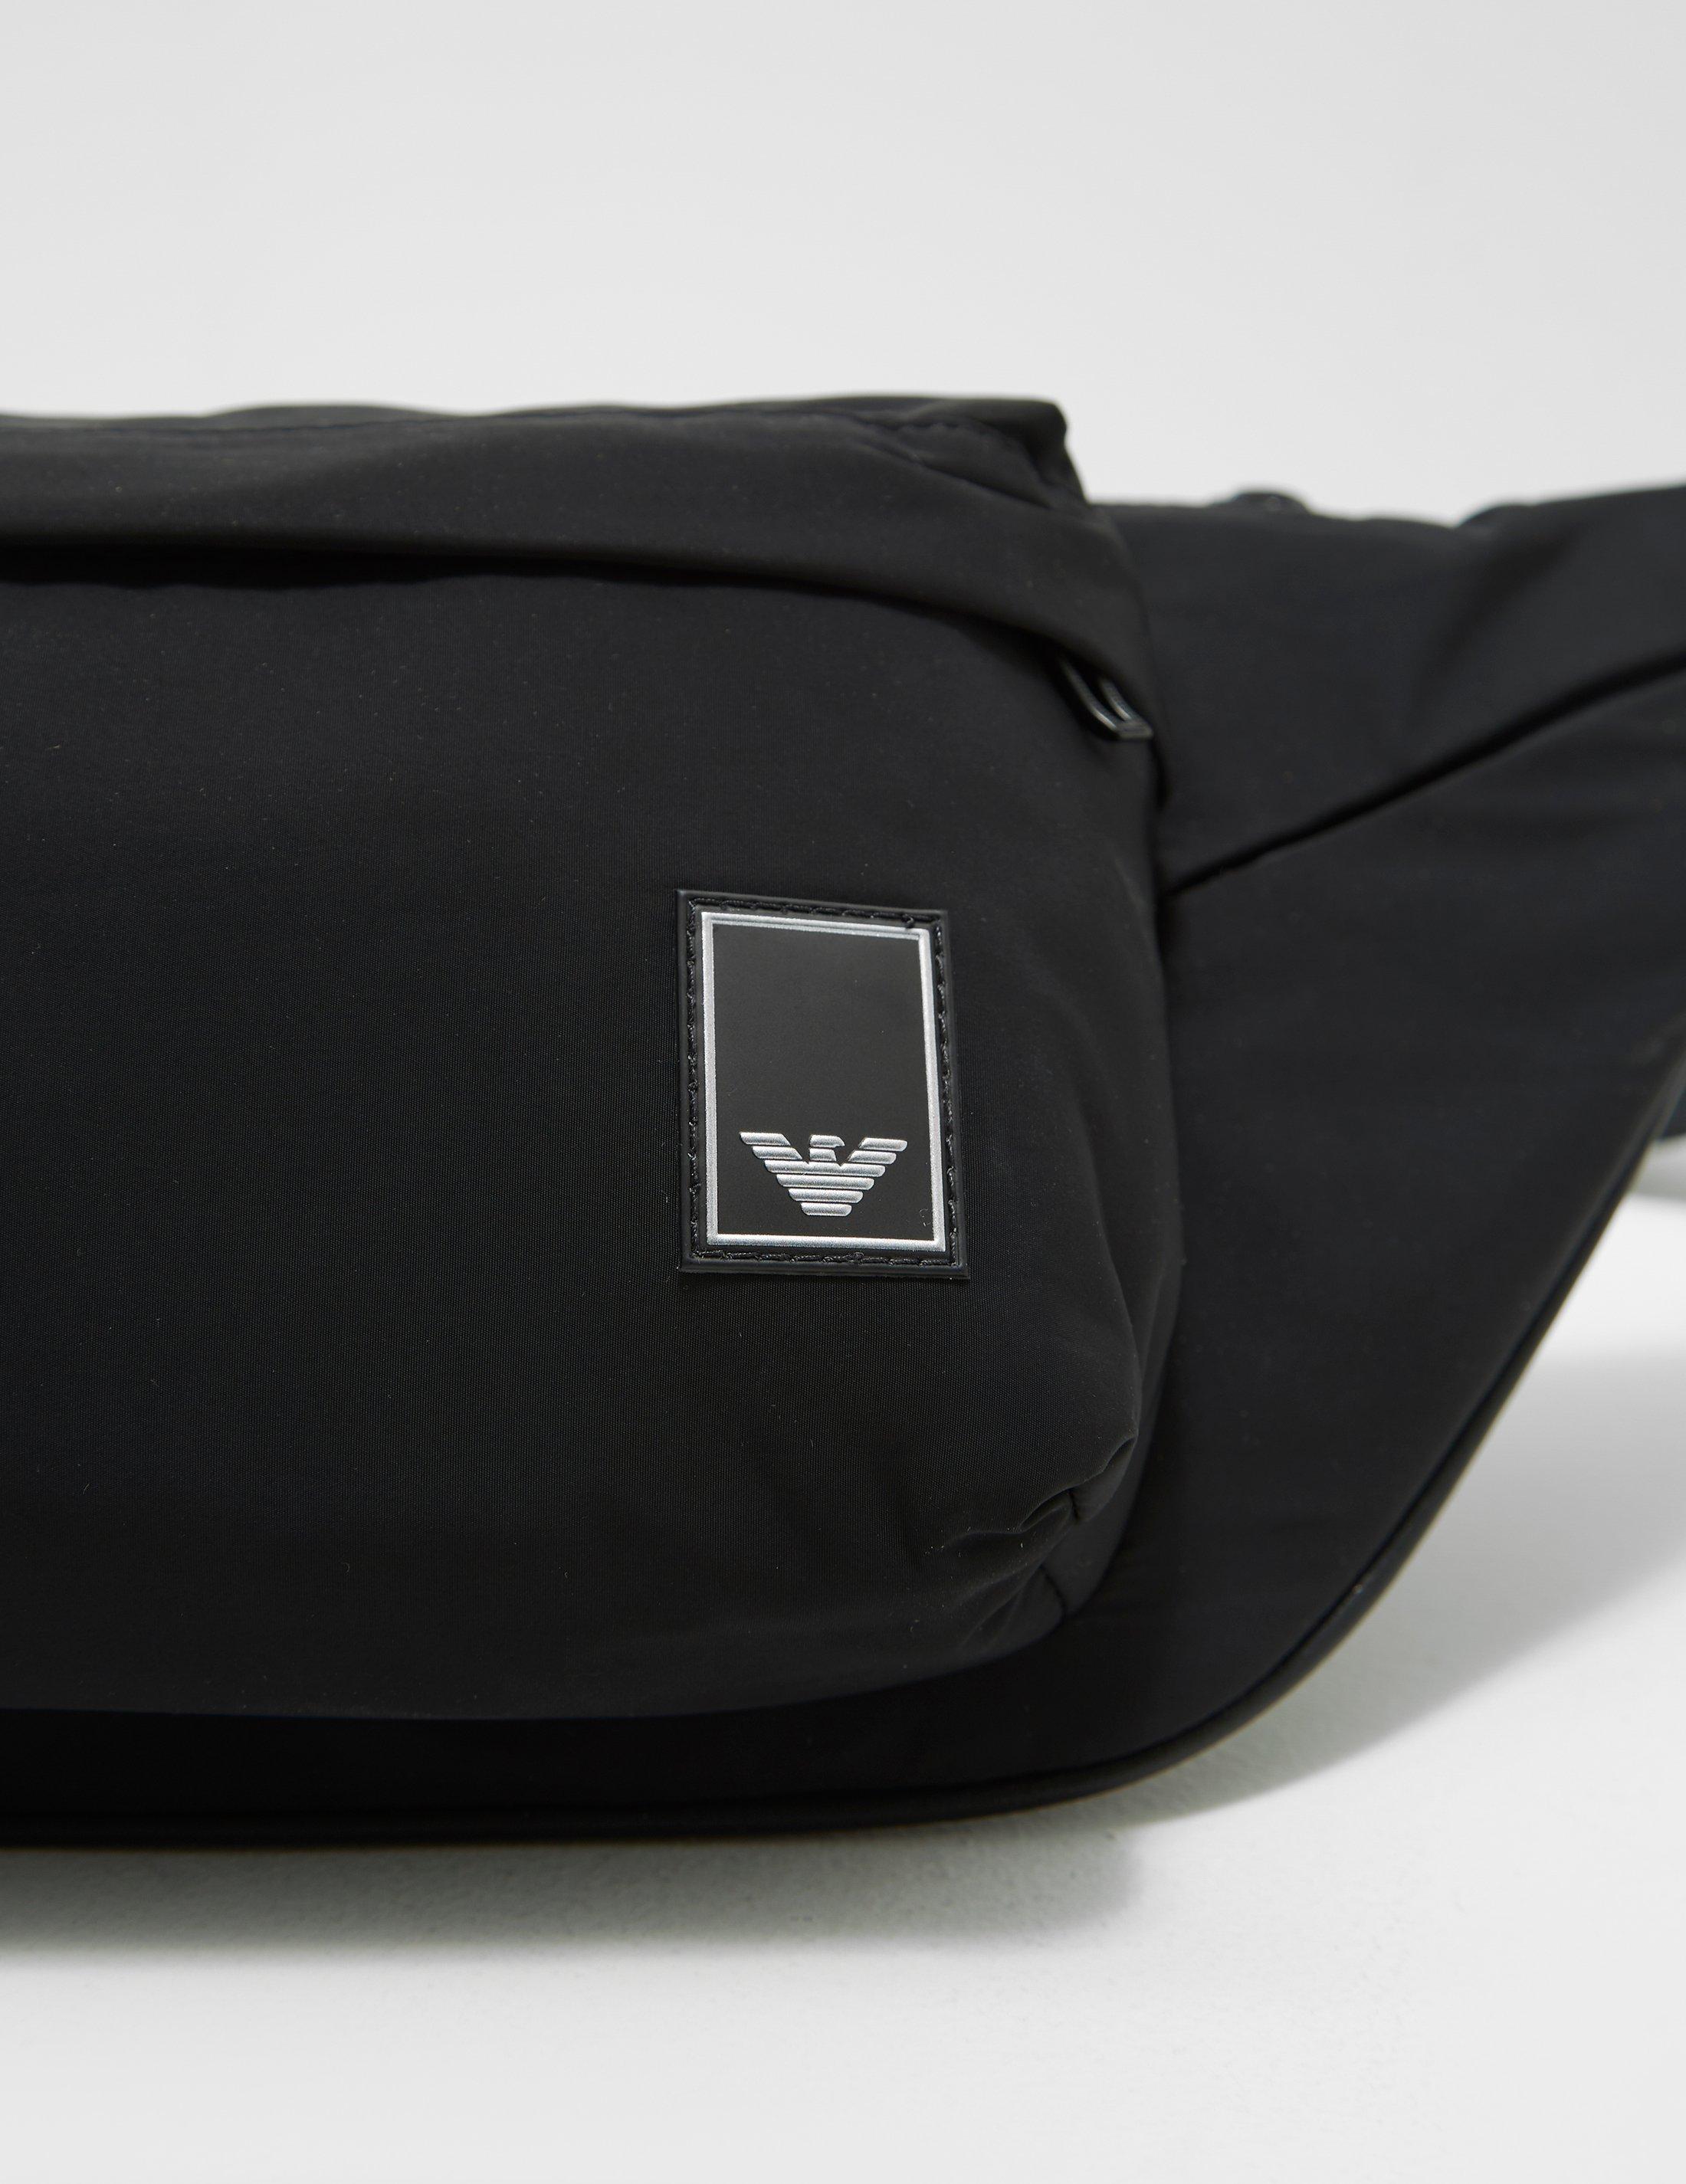 Emporio Armani Synthetic Patch Logo Bum Bag Black/black for Men - Lyst